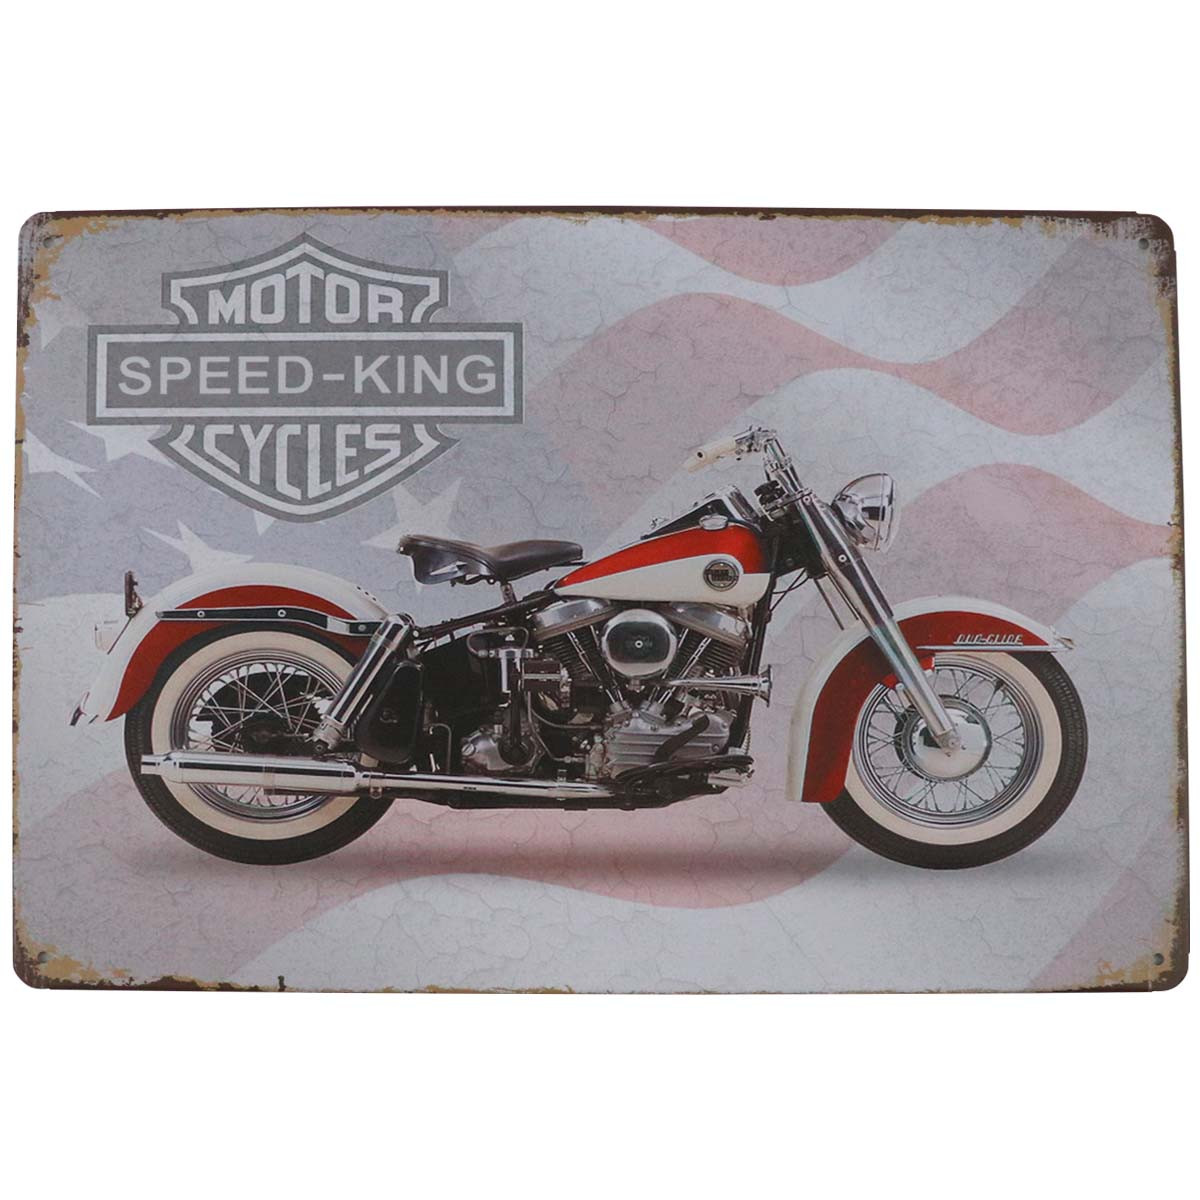 Placa Decorativa Moto Harley-Davidson